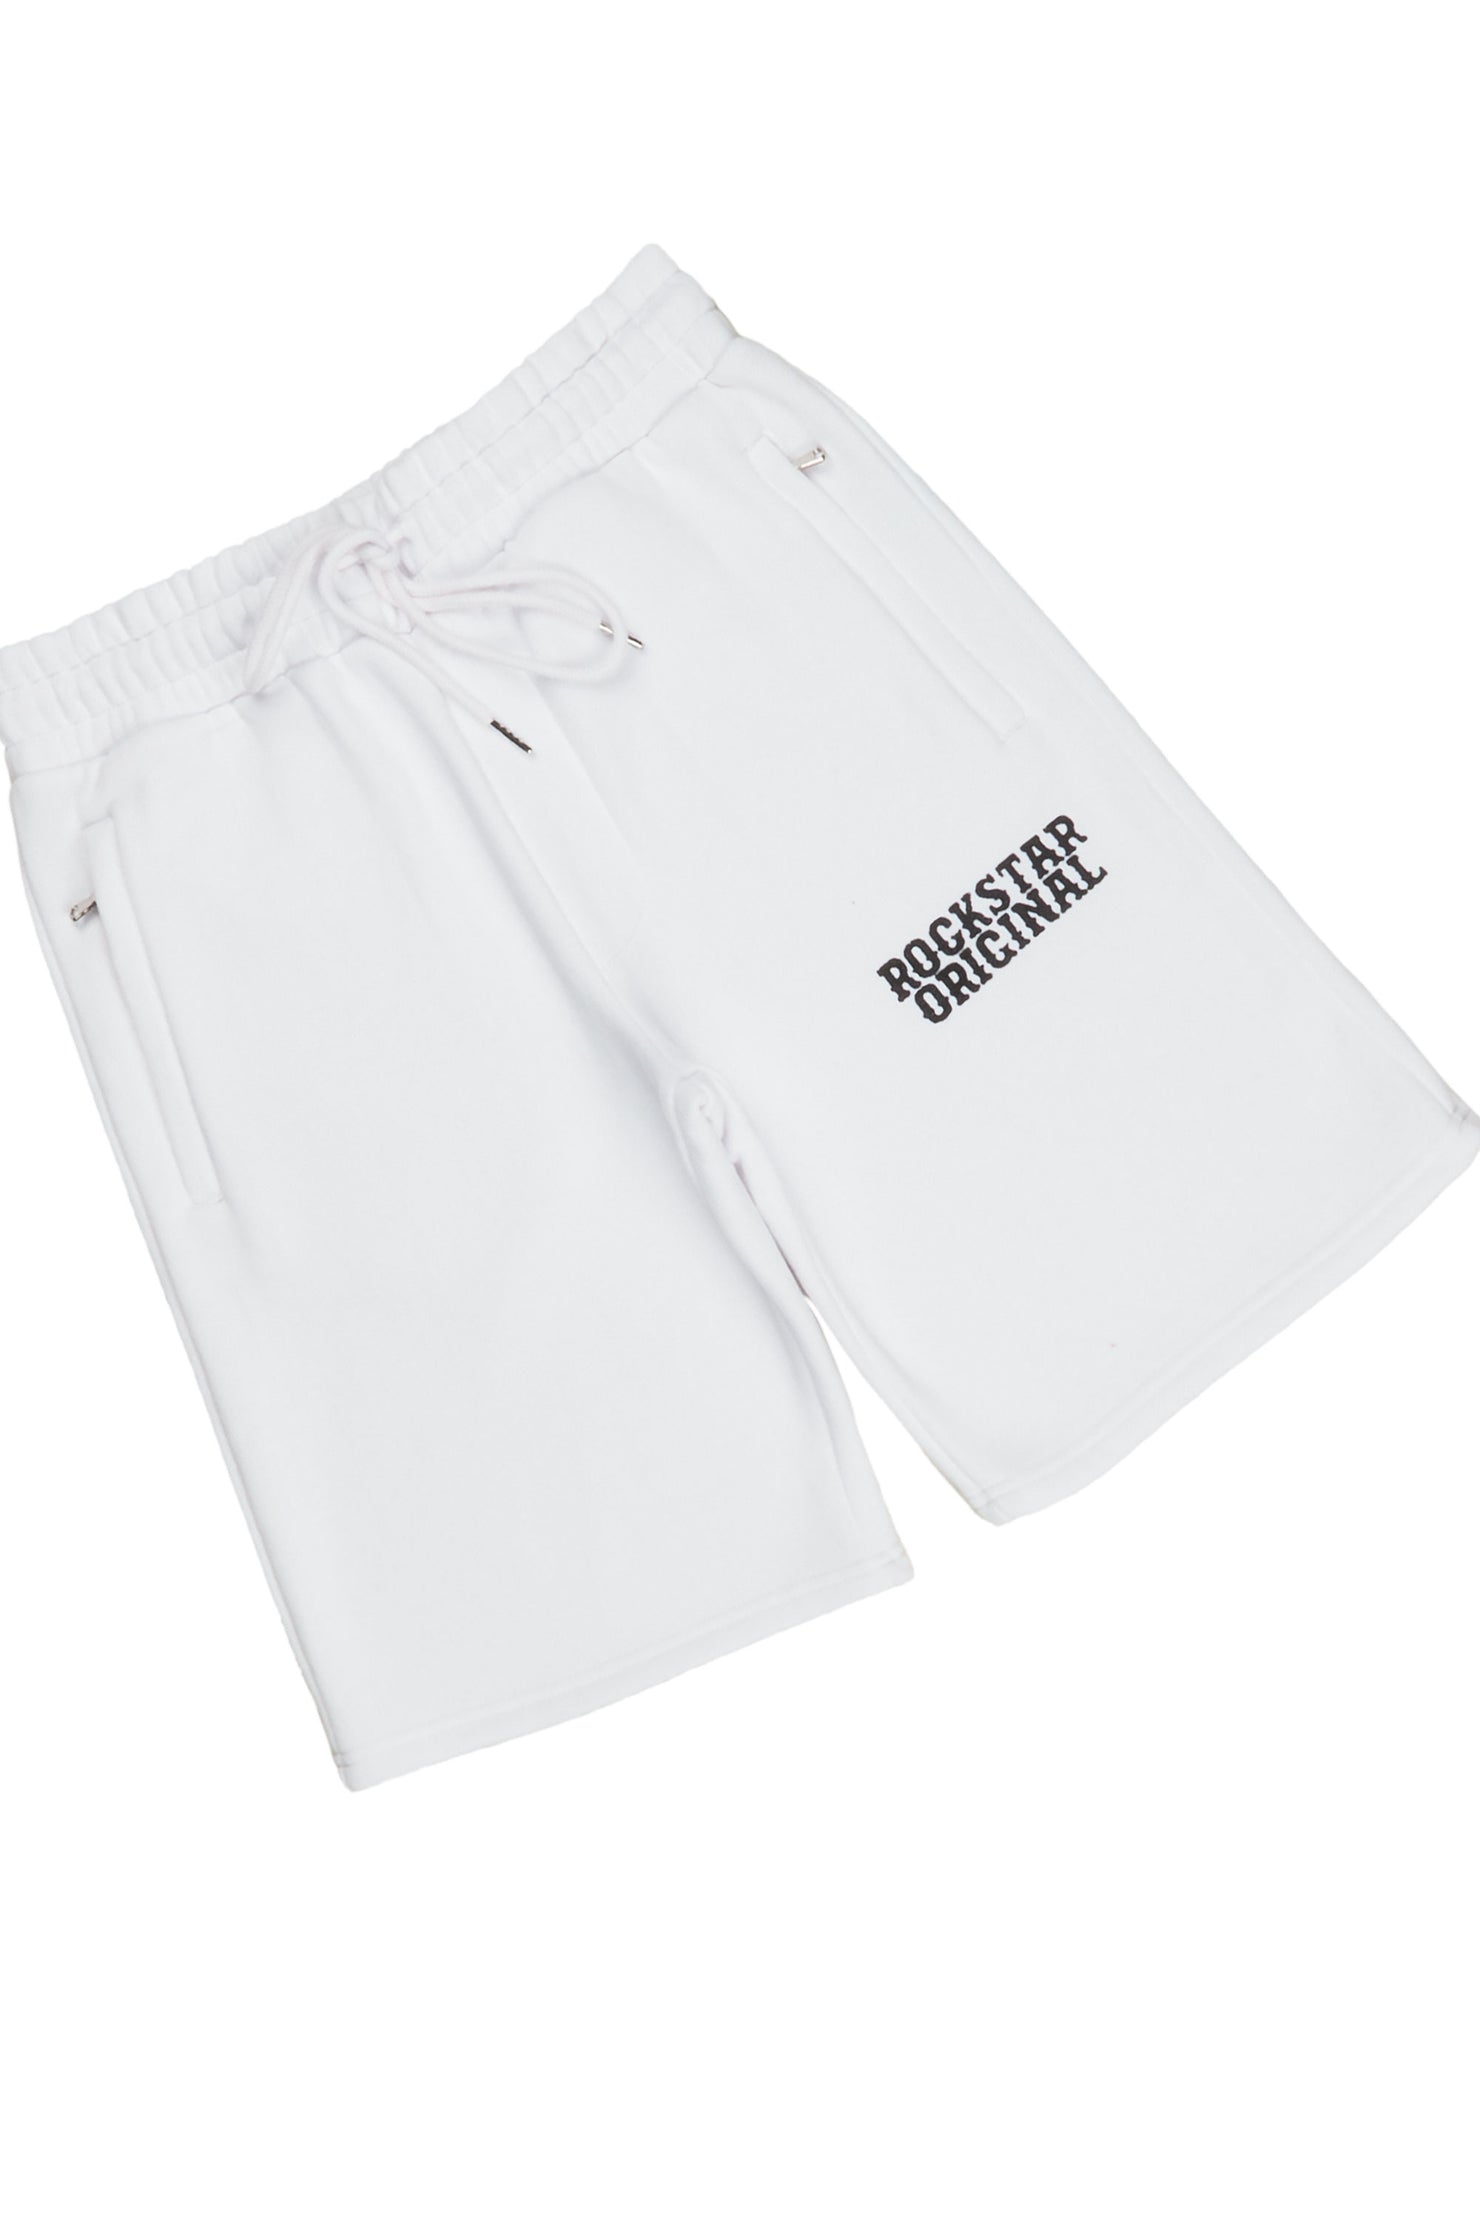 Posse White T-Shirt/Short Set